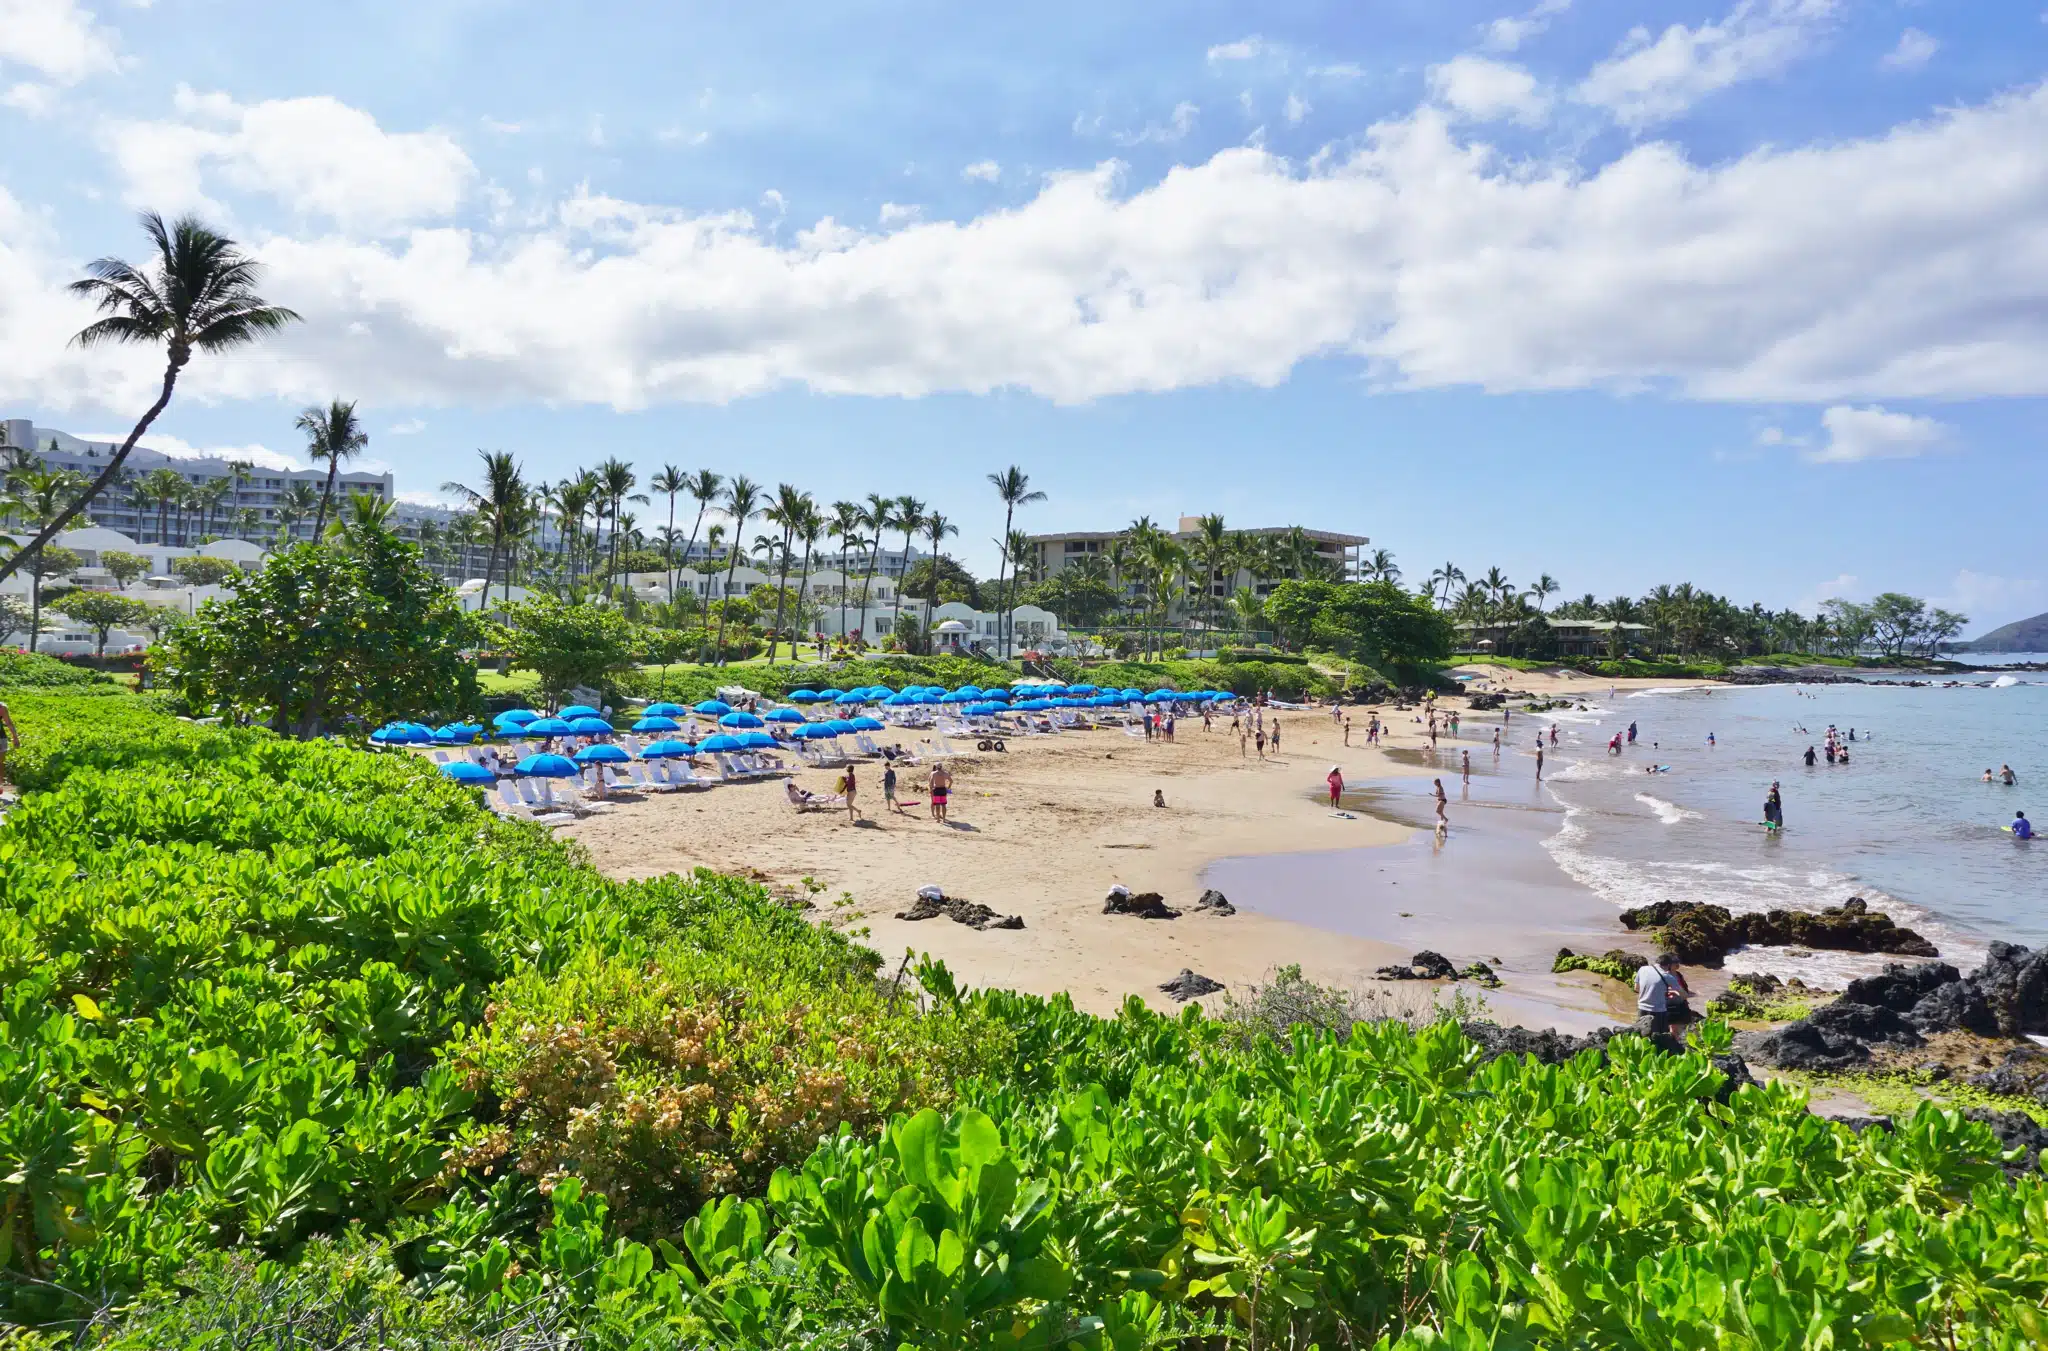 Wailea Beach is a Beach located in the city of Kihei on Maui, Hawaii